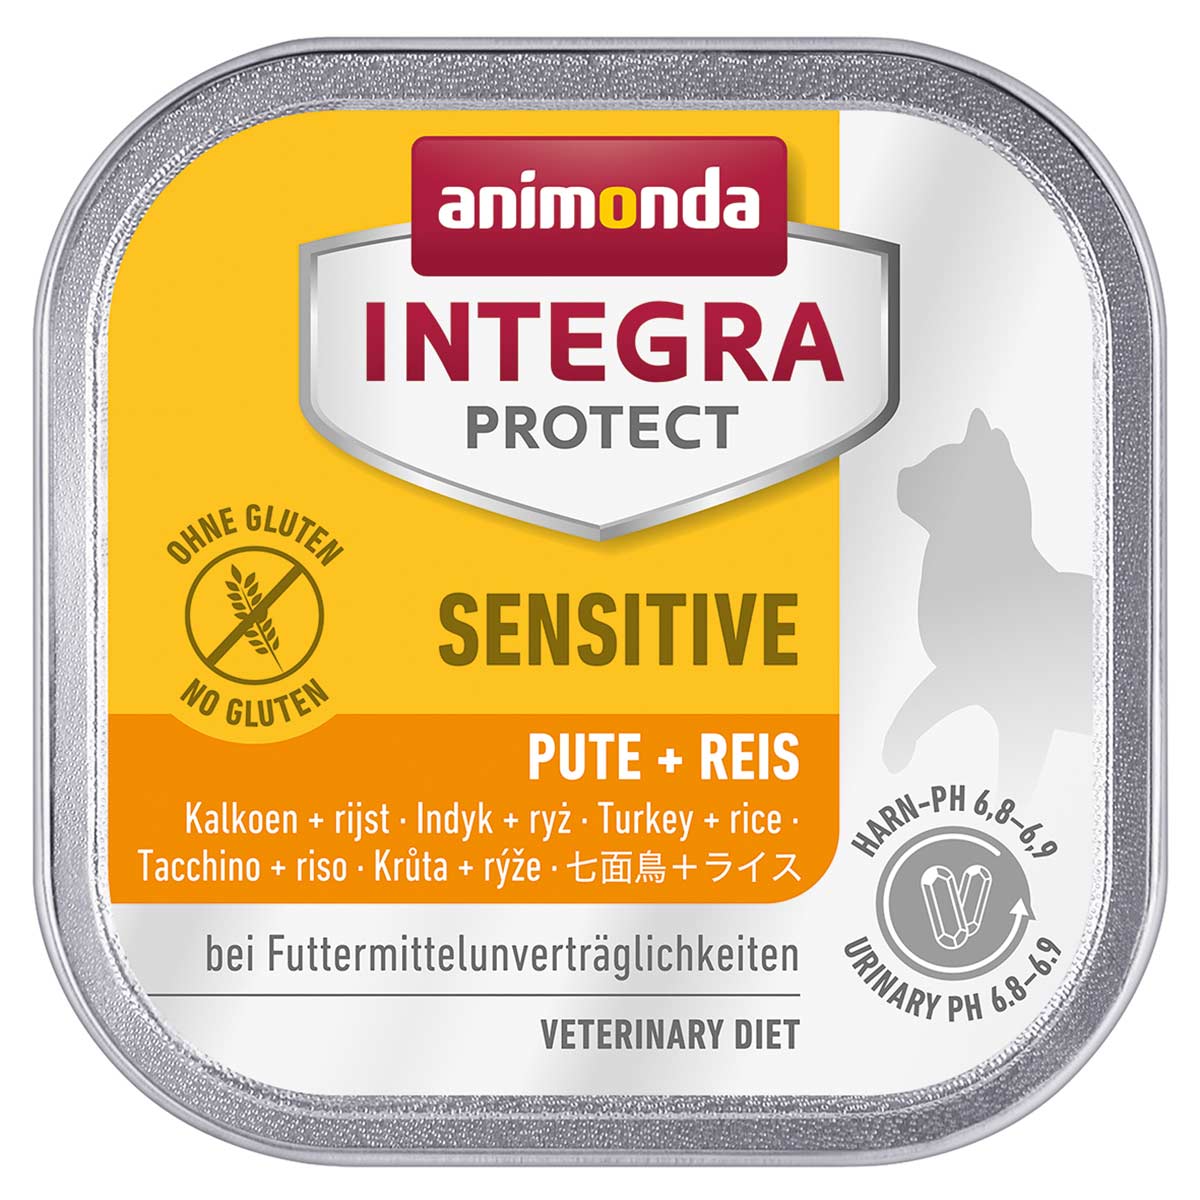 animonda INTEGRA PROTECT Sensitive Pute und Reis 16x100g von animonda Integra Protect